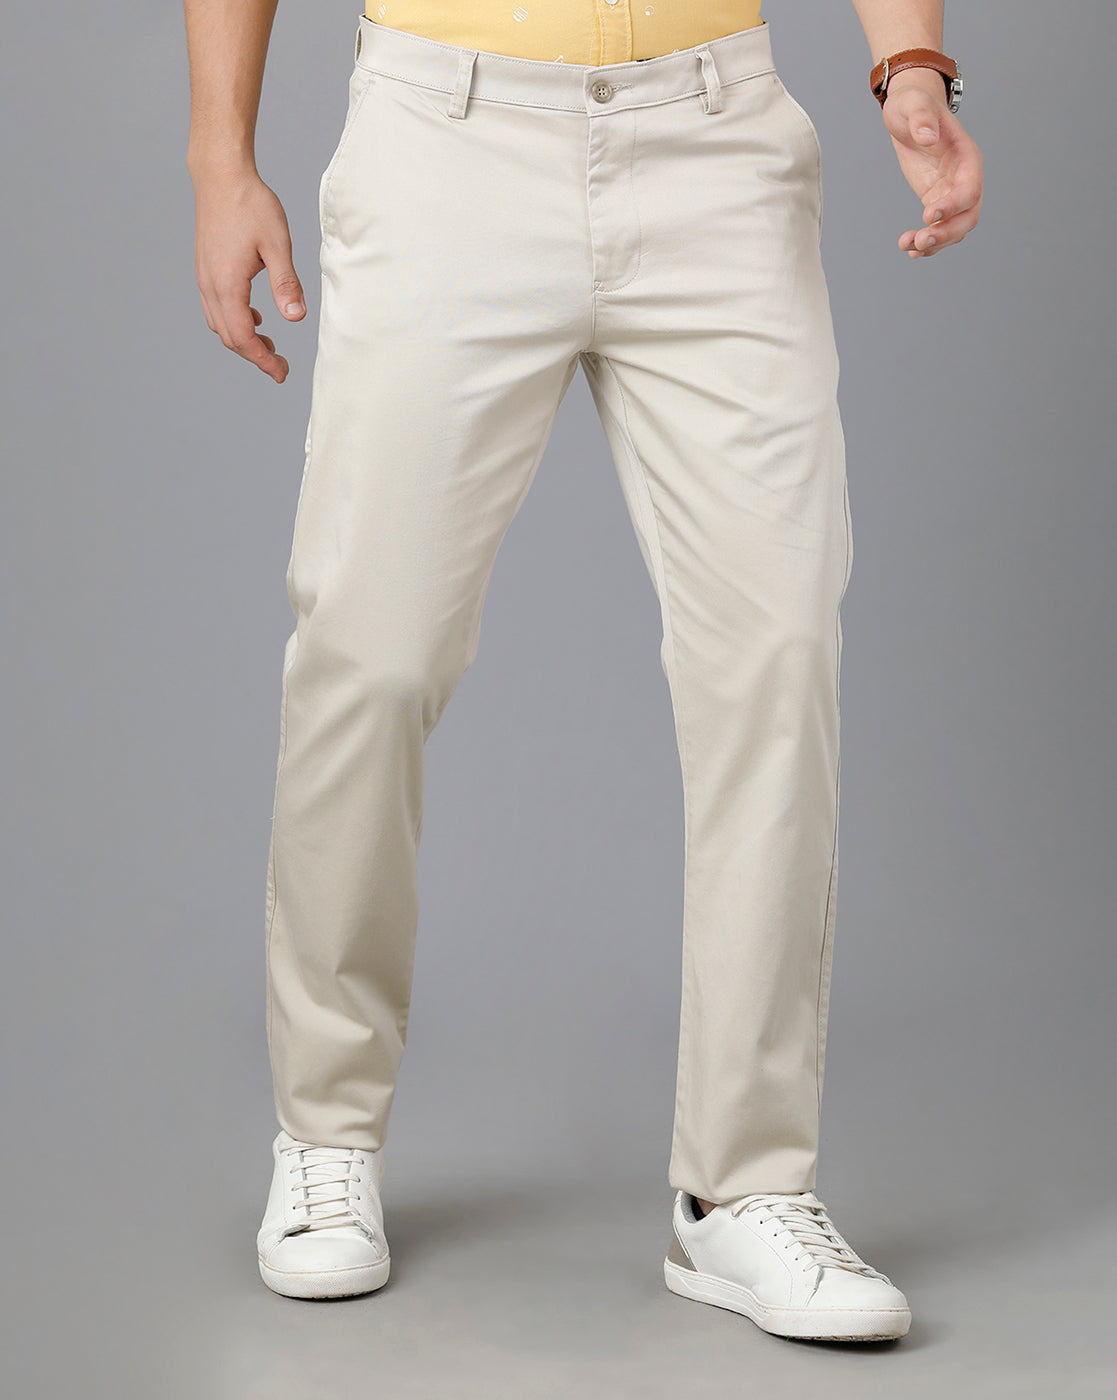 Di Sondrio Off White Stretch Cotton Chino - Custom Fit Pants